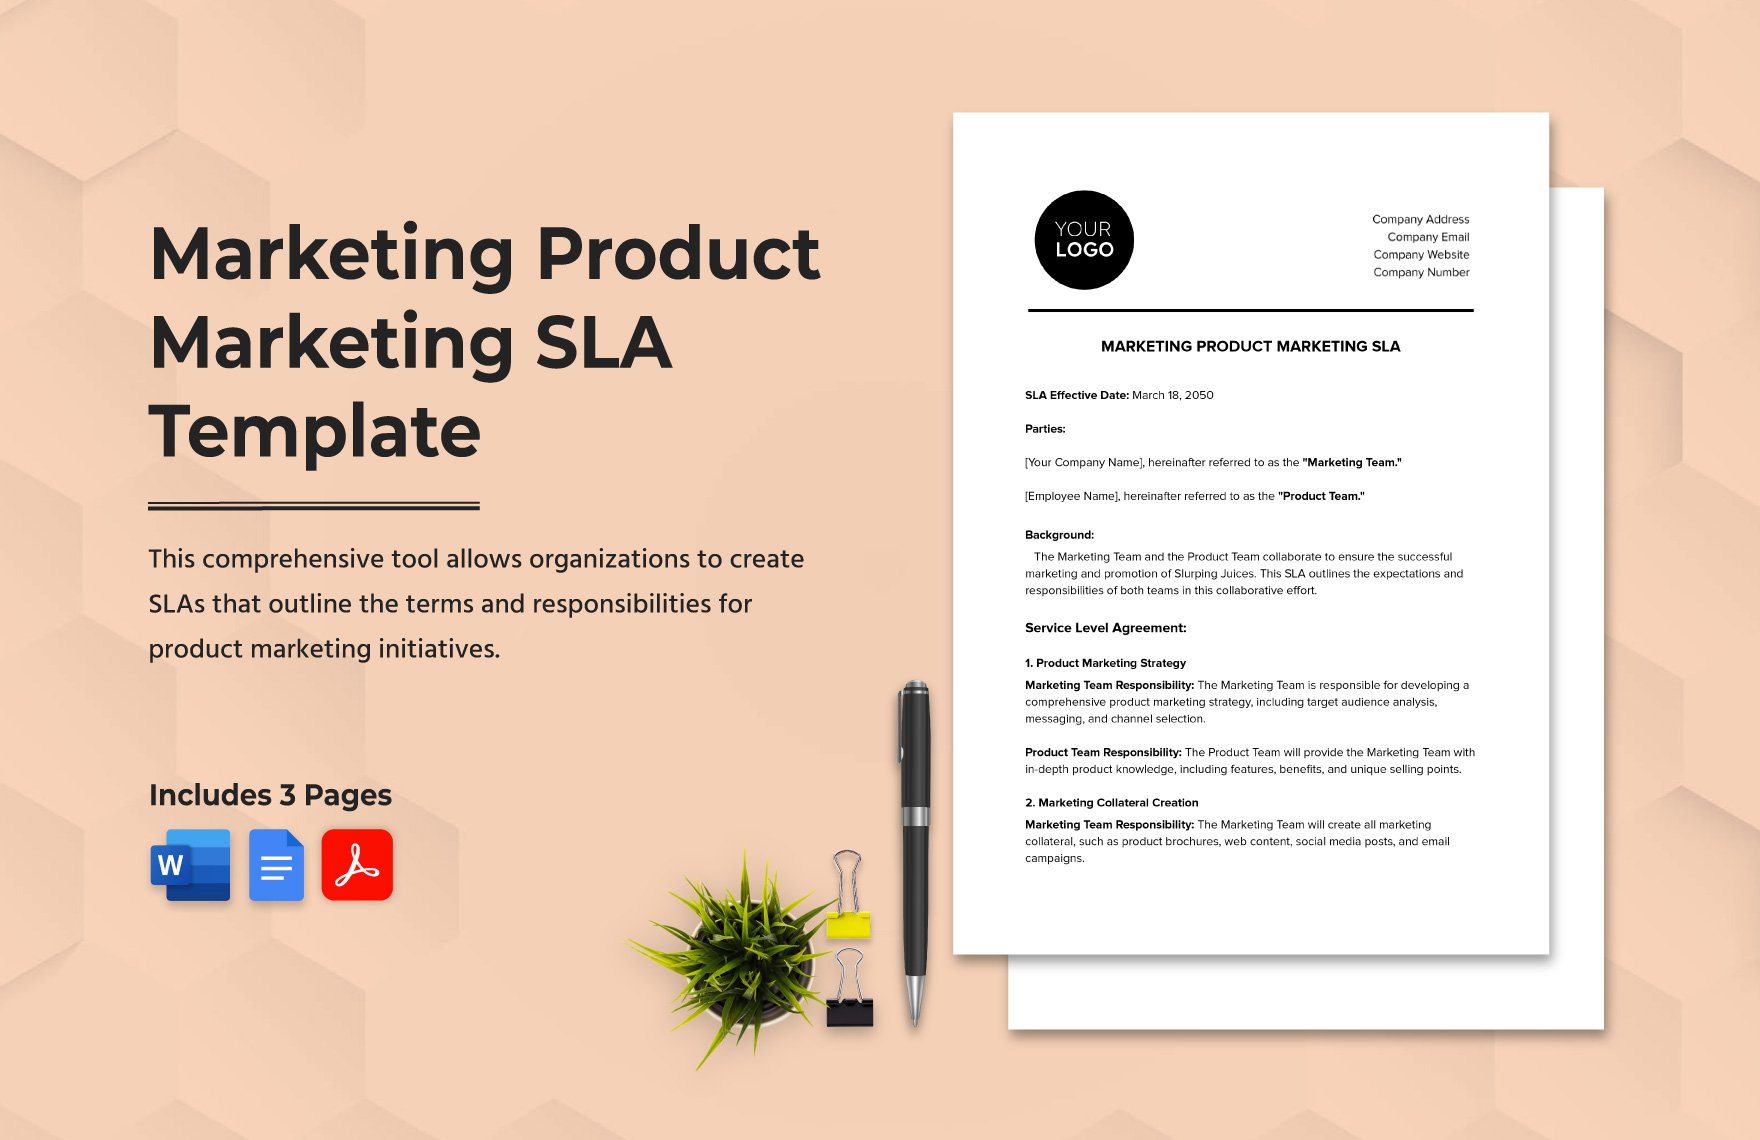 Marketing Product Marketing SLA Template